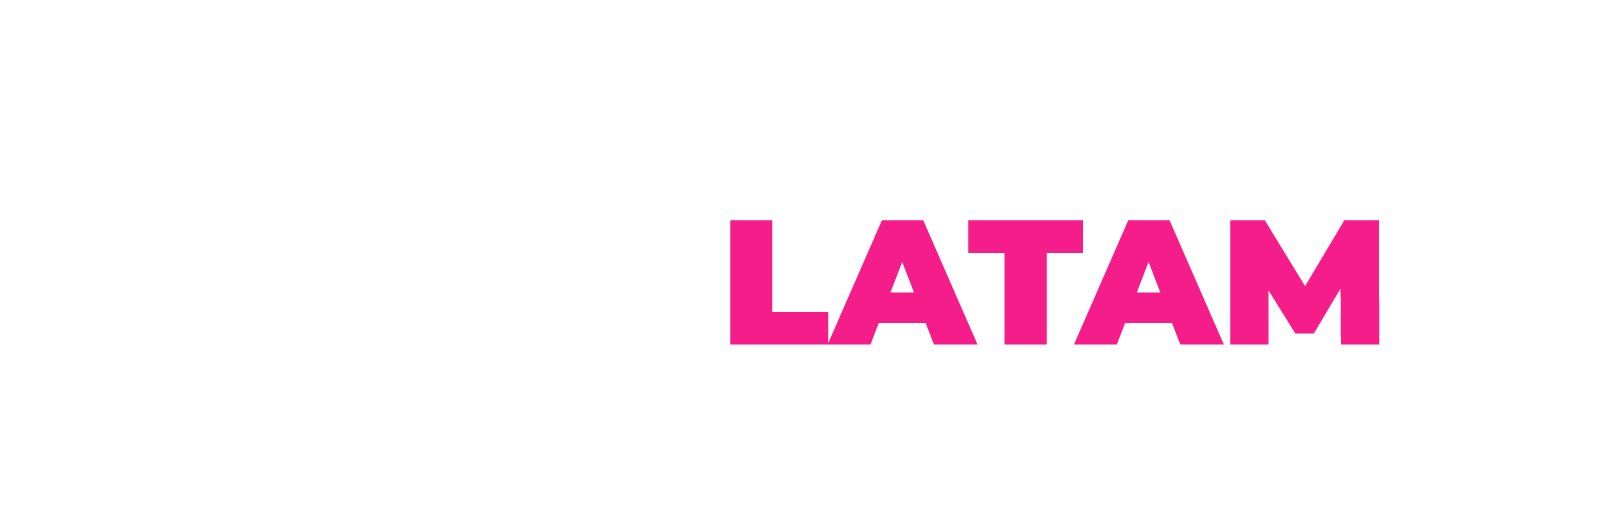 xday2021-logo-white-new